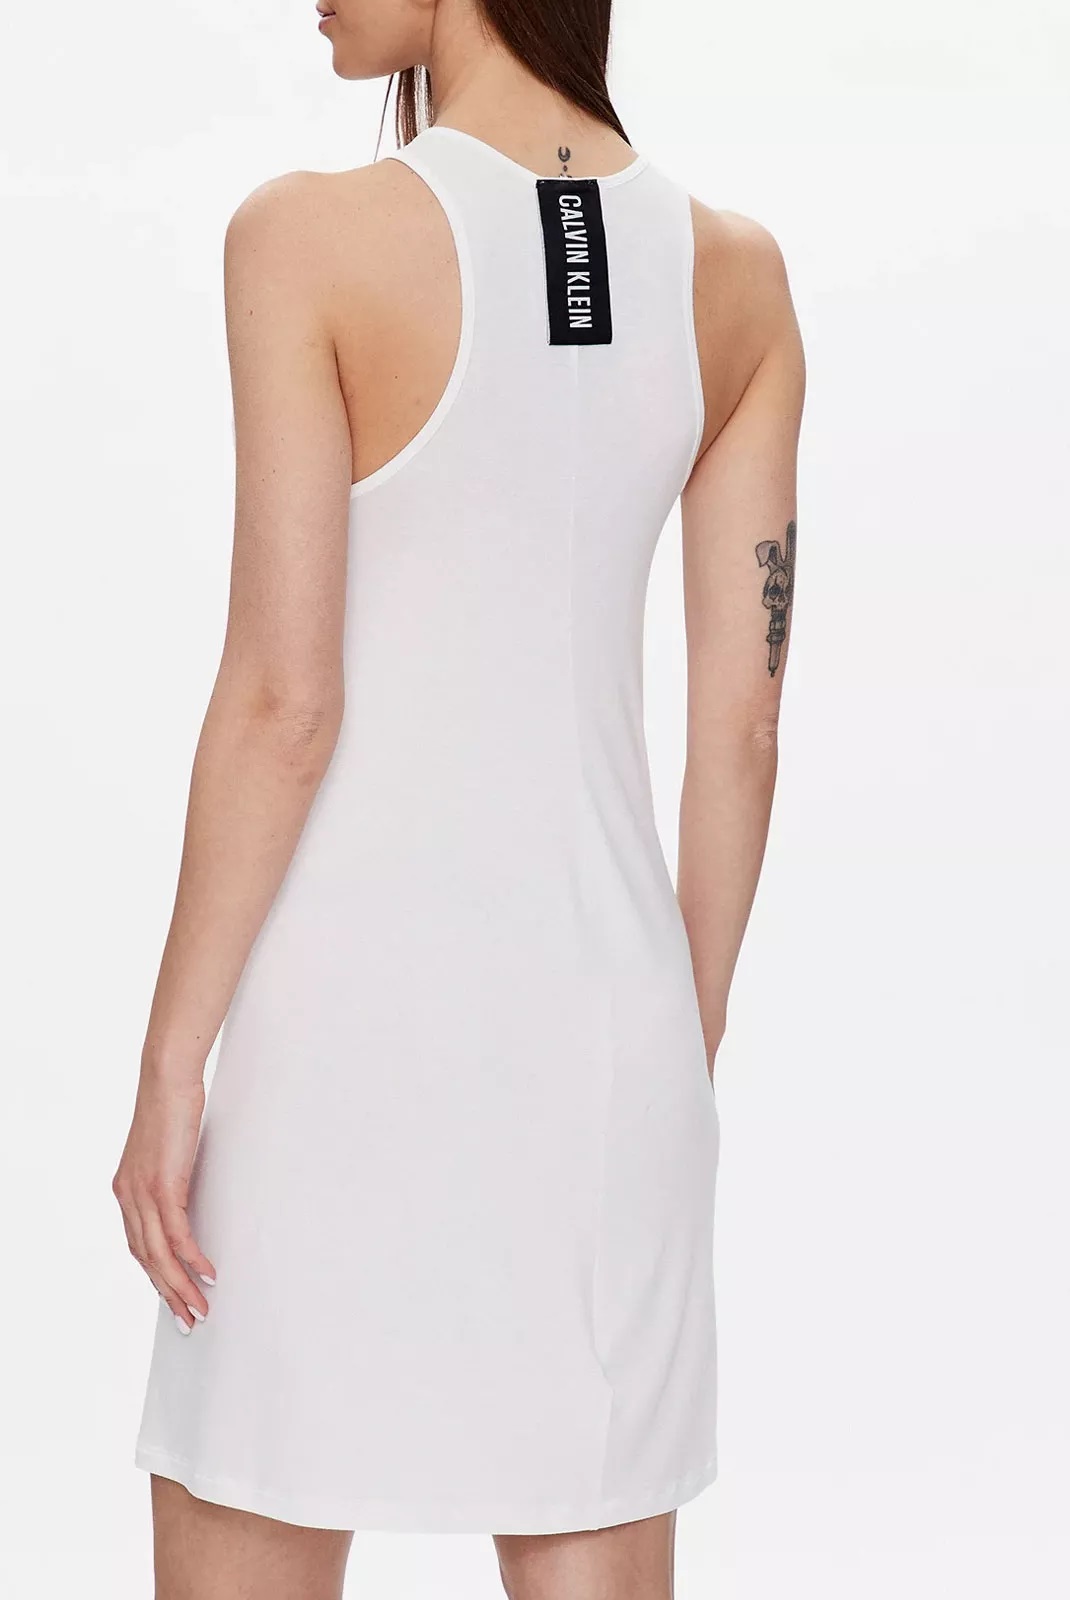 Calvin Klein dámské šaty Tank bílé s logem Velikost: L